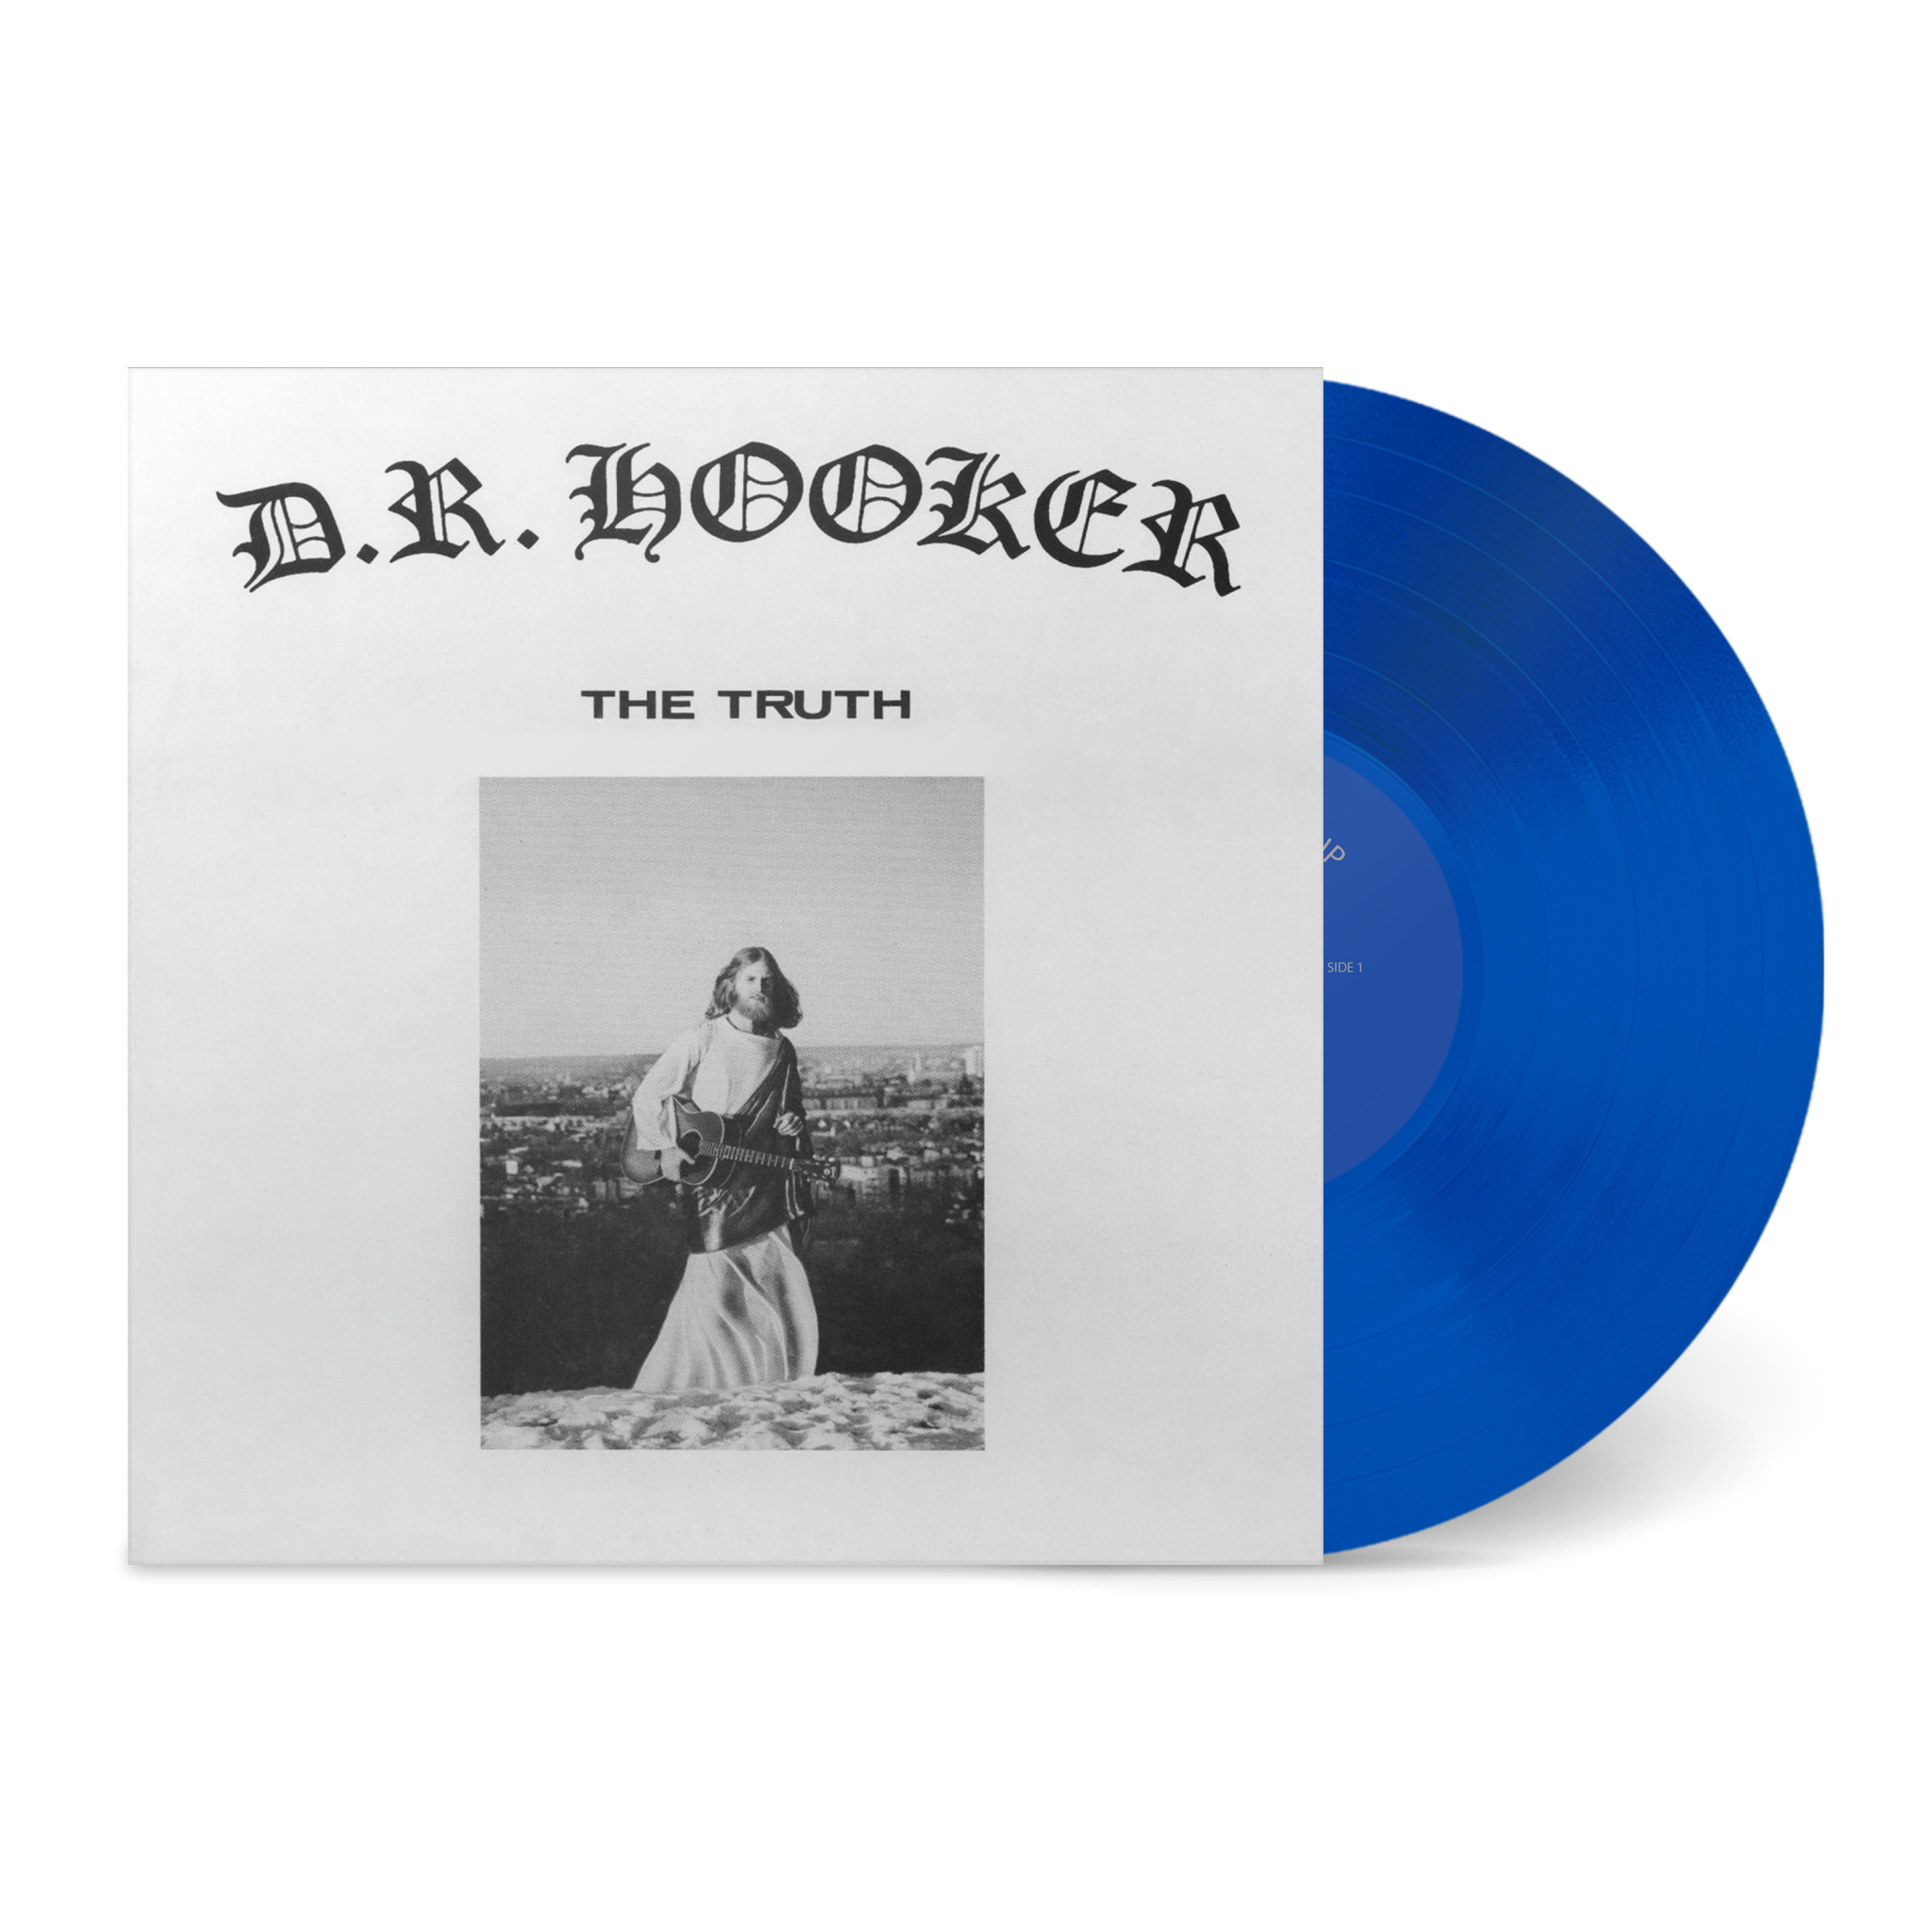 Numero Group D.R. Hooker - The Truth (Blue Vinyl)